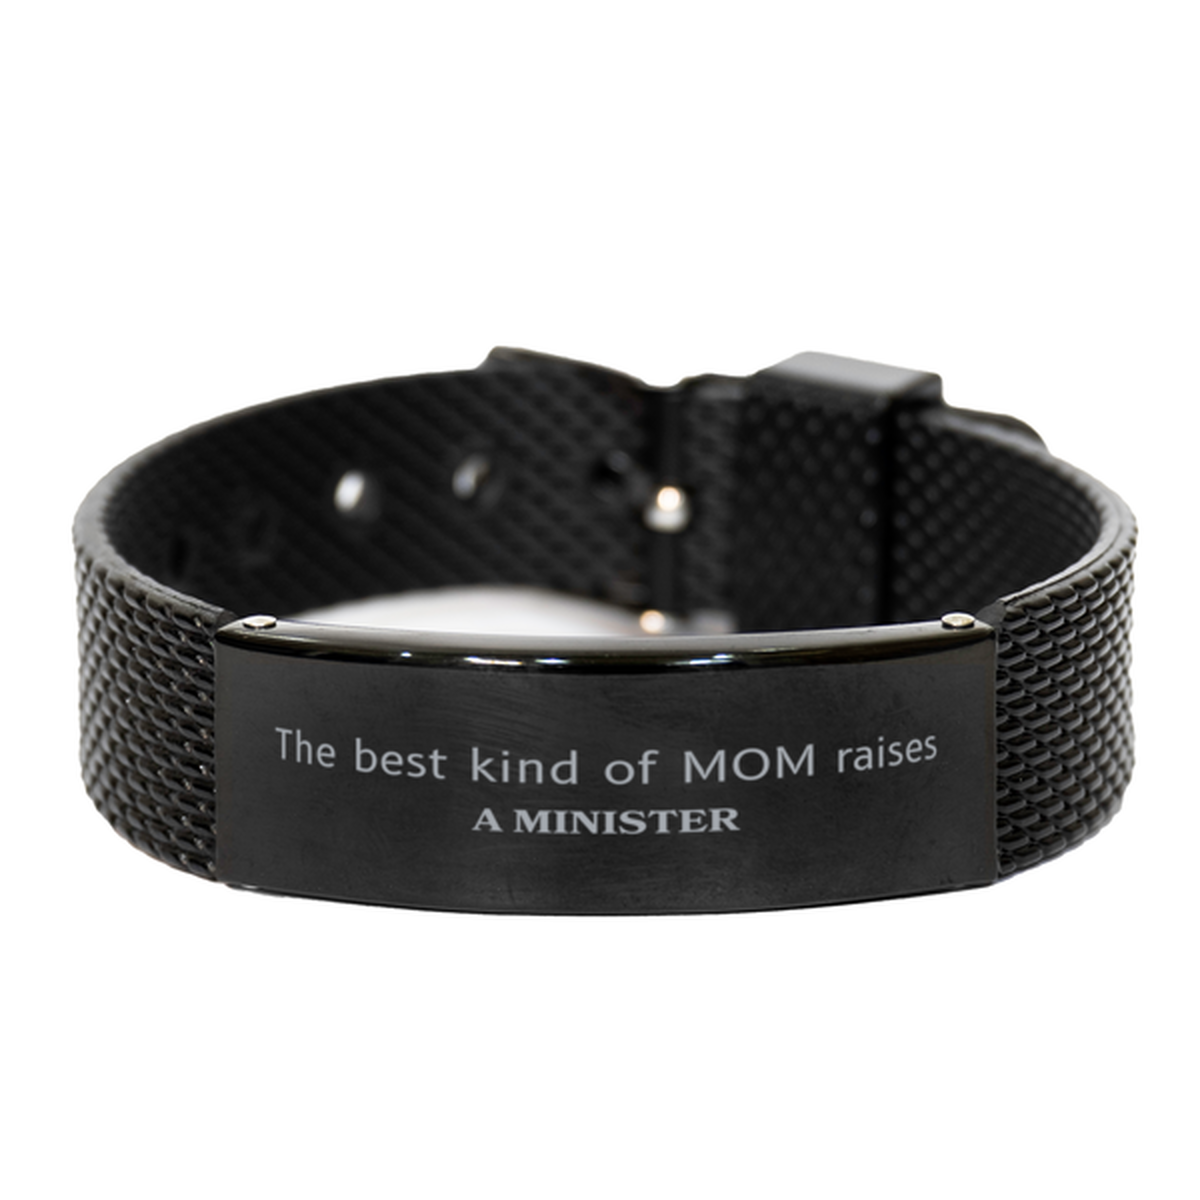 Funny Minister Mom Gifts, The best kind of MOM raises Minister, Birthday, Mother's Day, Cute Black Shark Mesh Bracelet for Minister Mom